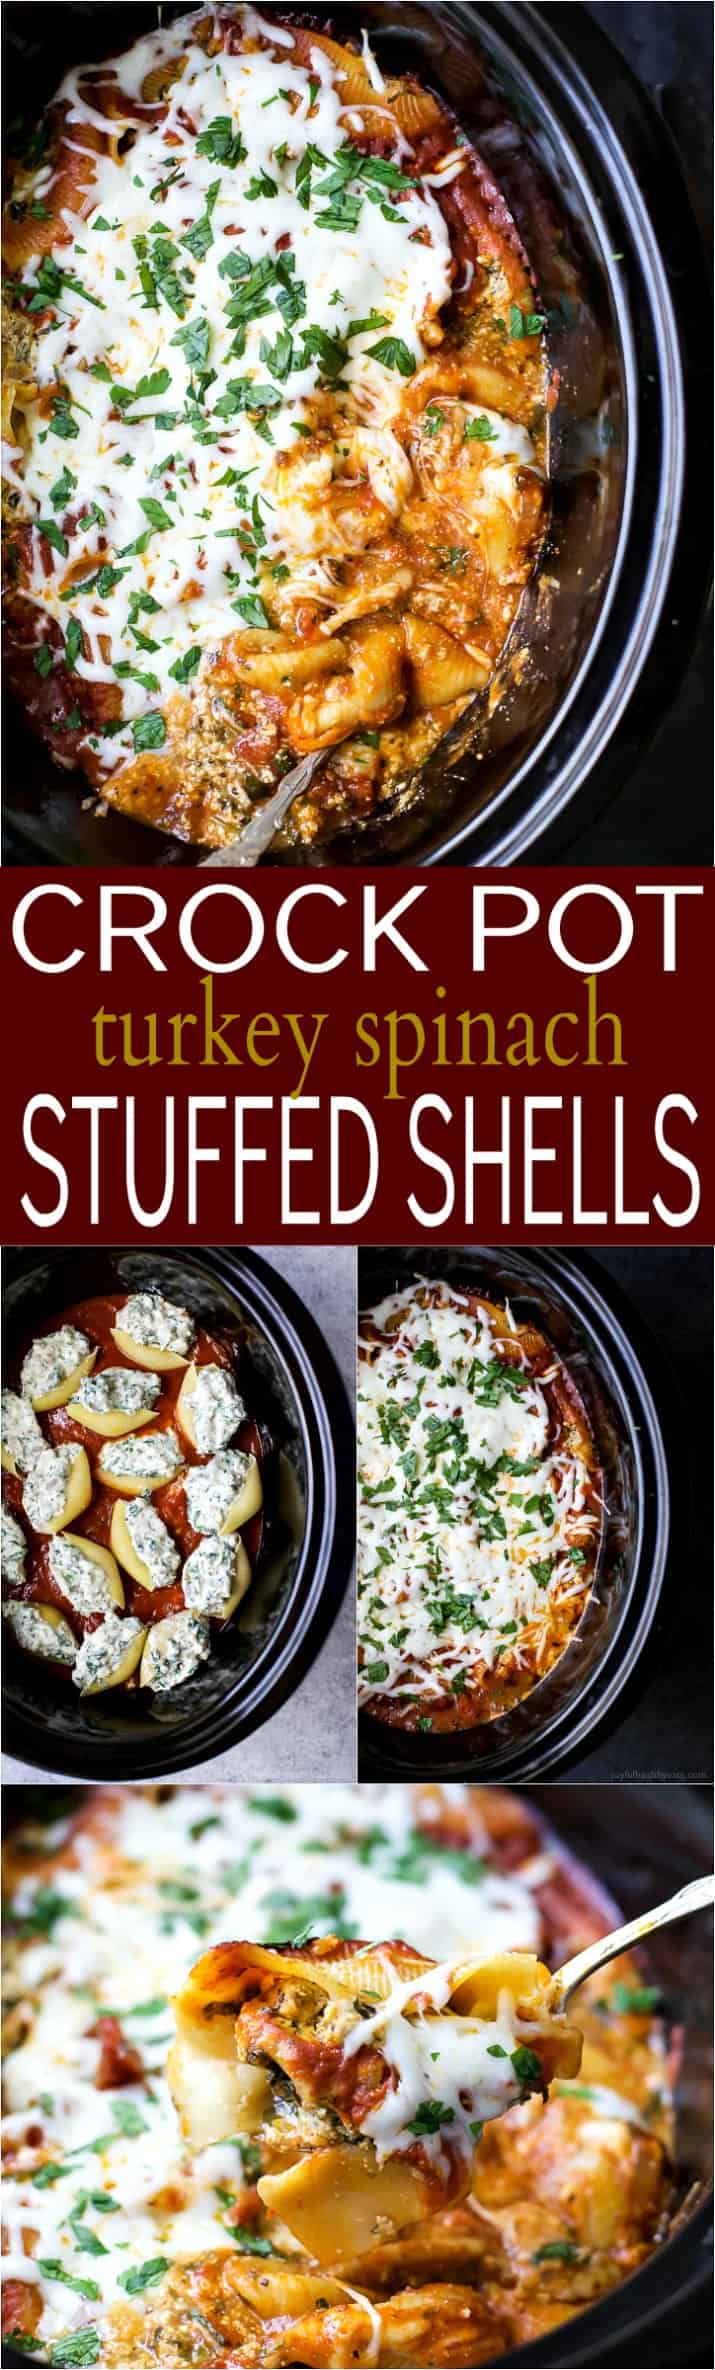 Crock Pot Turkey Spinach Stuffed Shells recipe collage